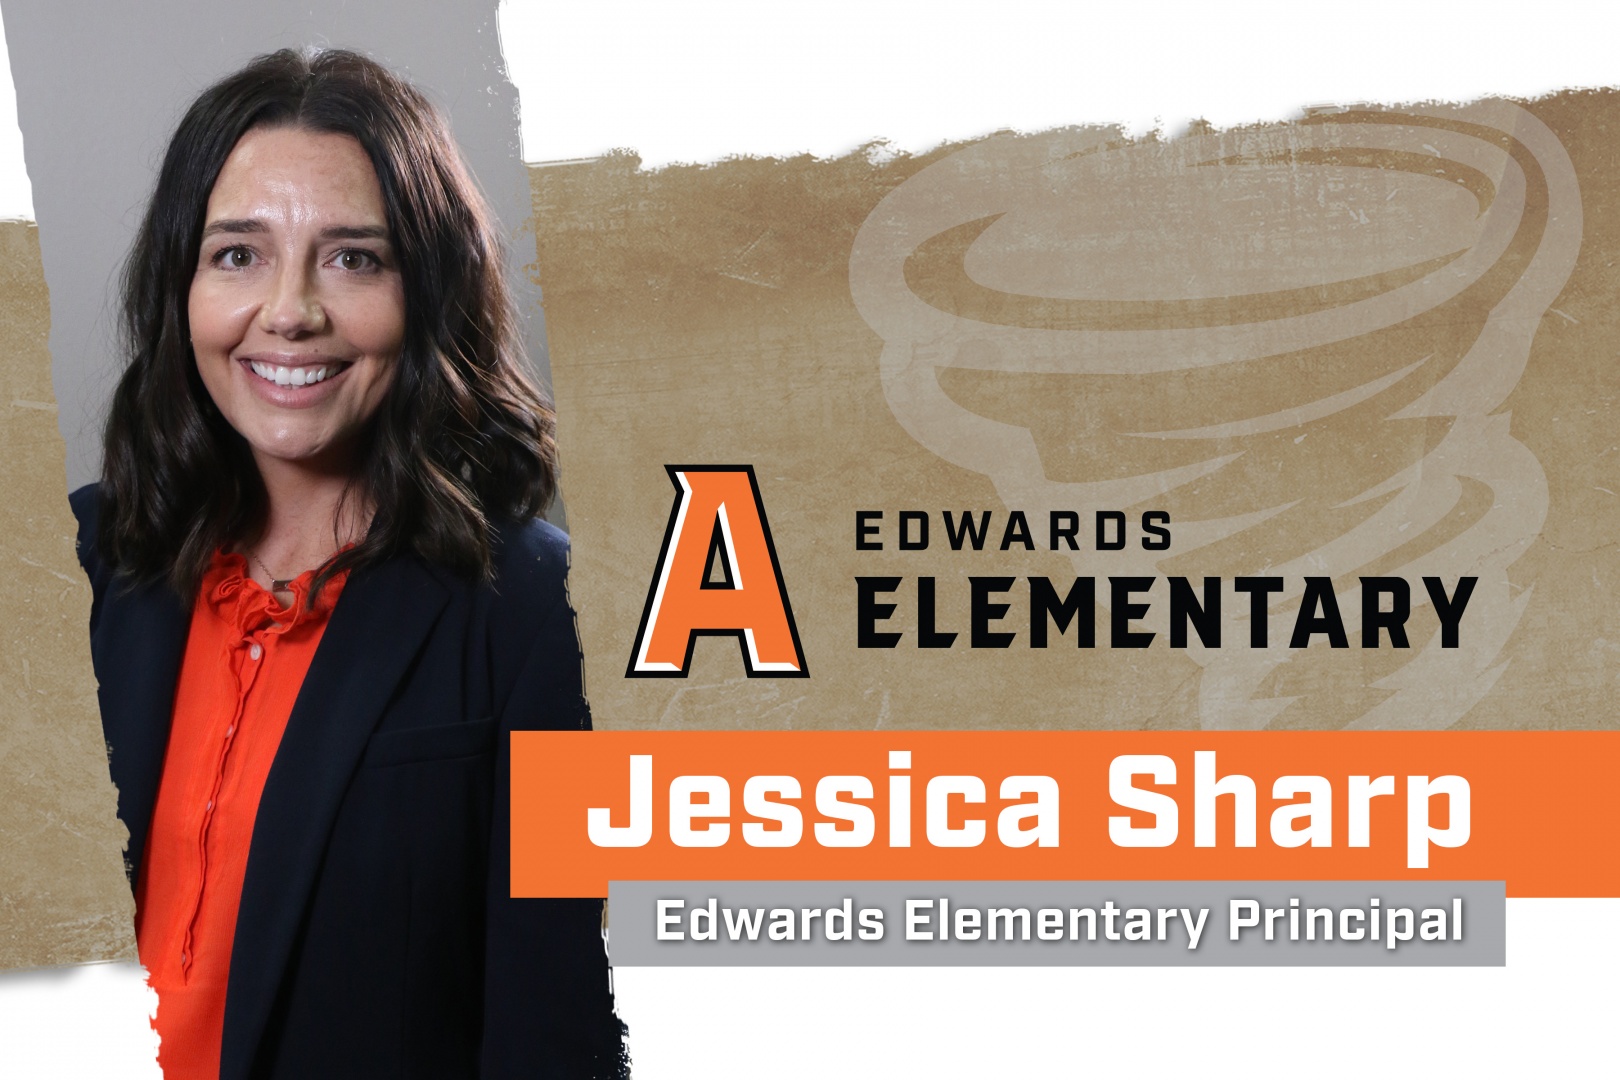 Jessica Sharpe named as new Edwards Elementary Principal